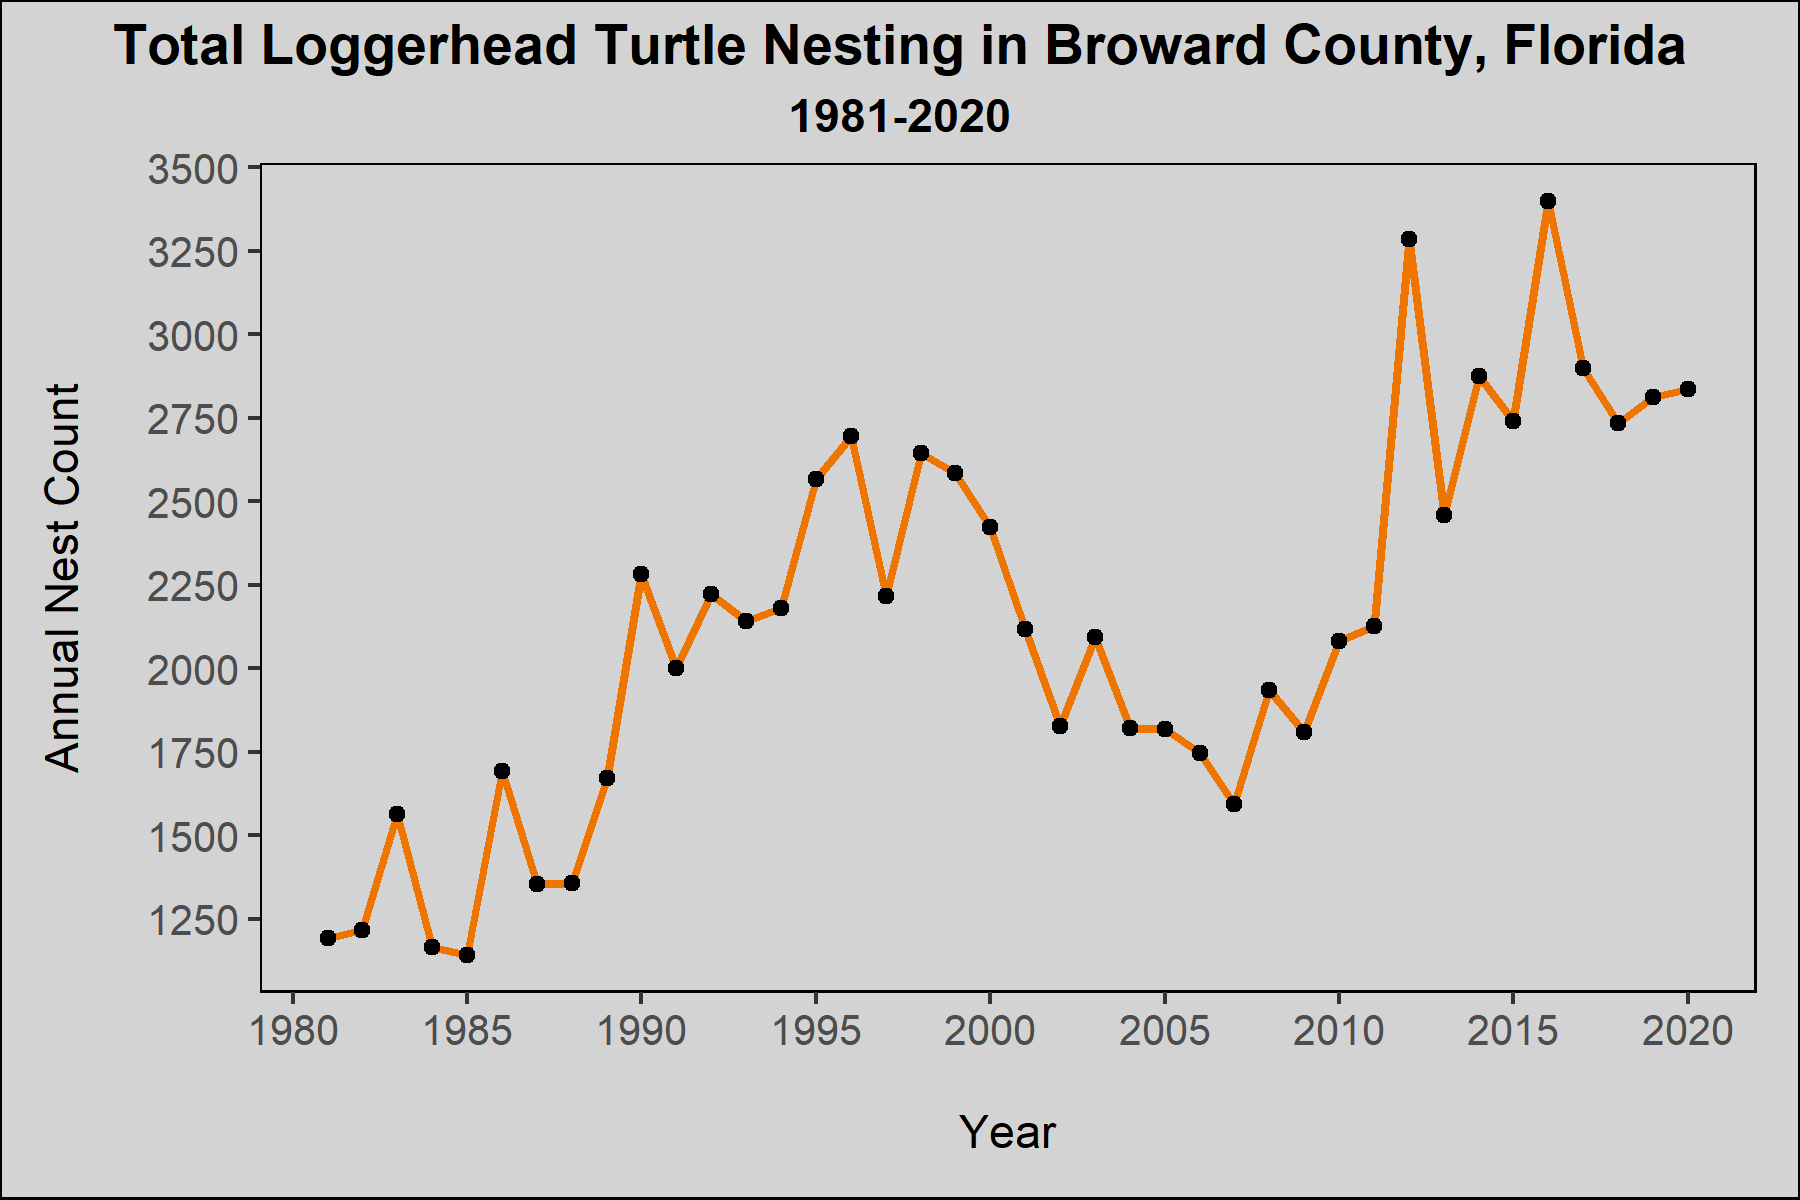 Historic Loggerhead Nesting Trends